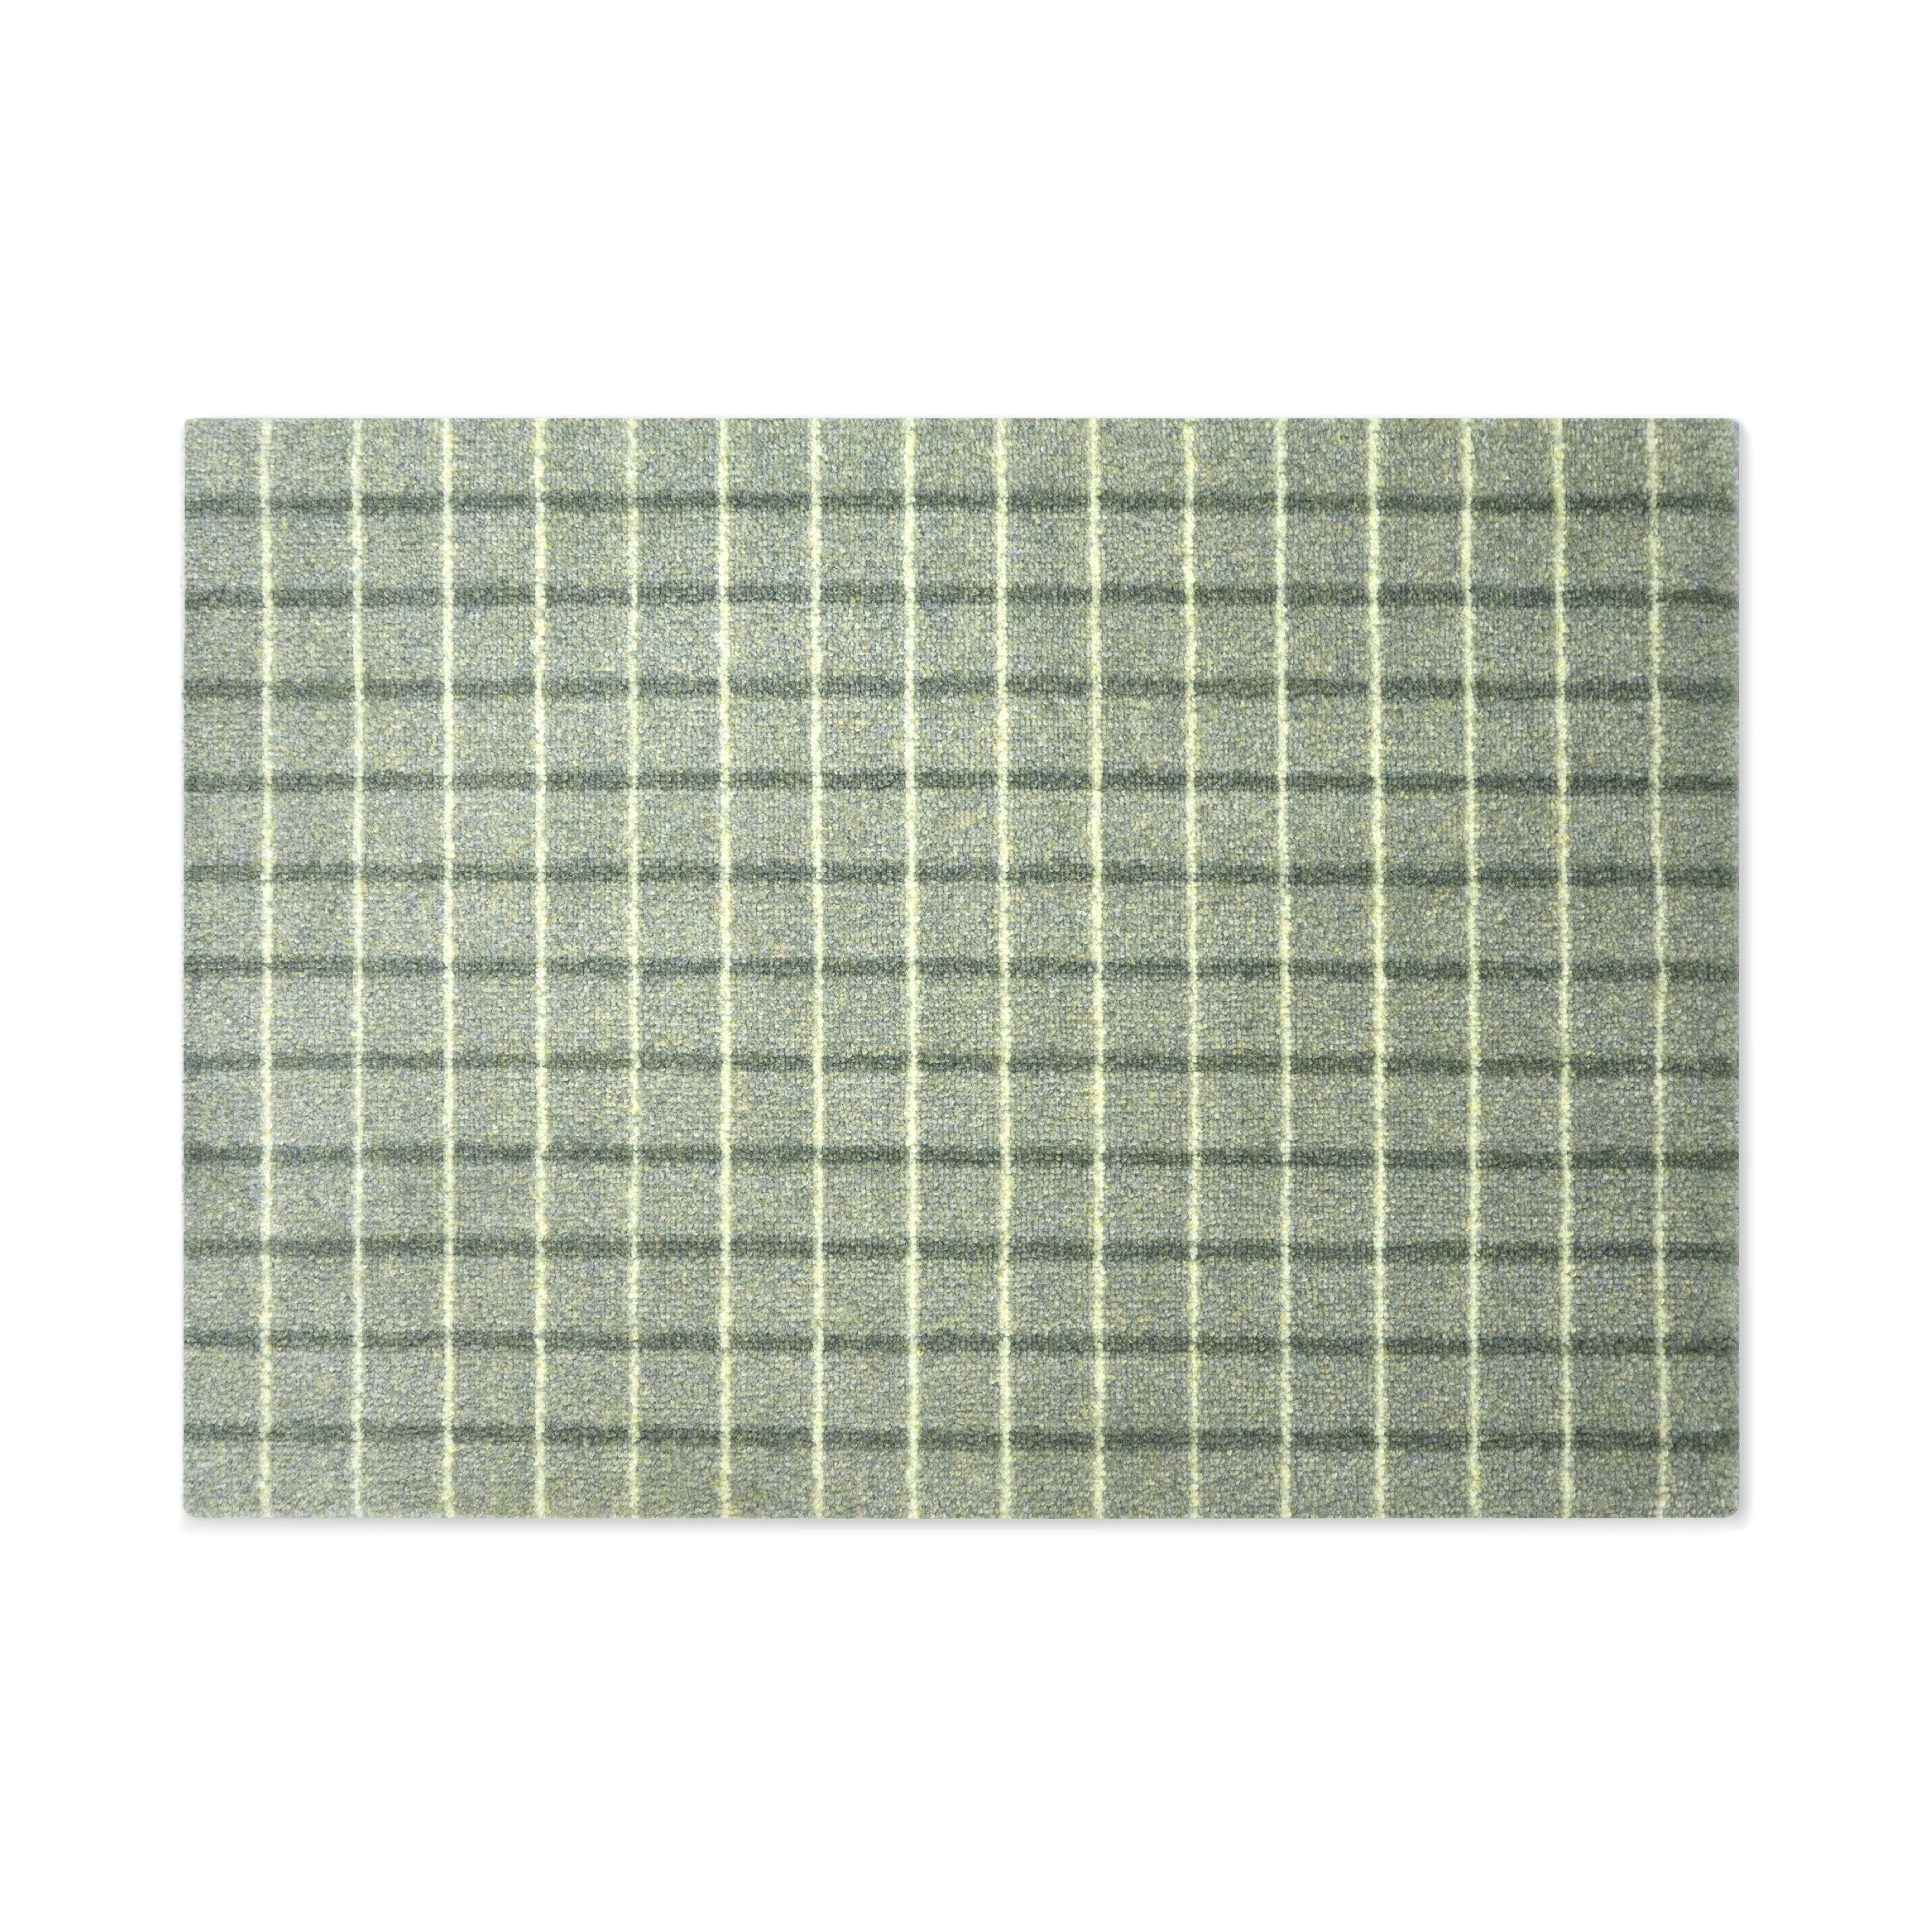 HEMAT Grid Doormat Matcha sítróna, 60x85 cm